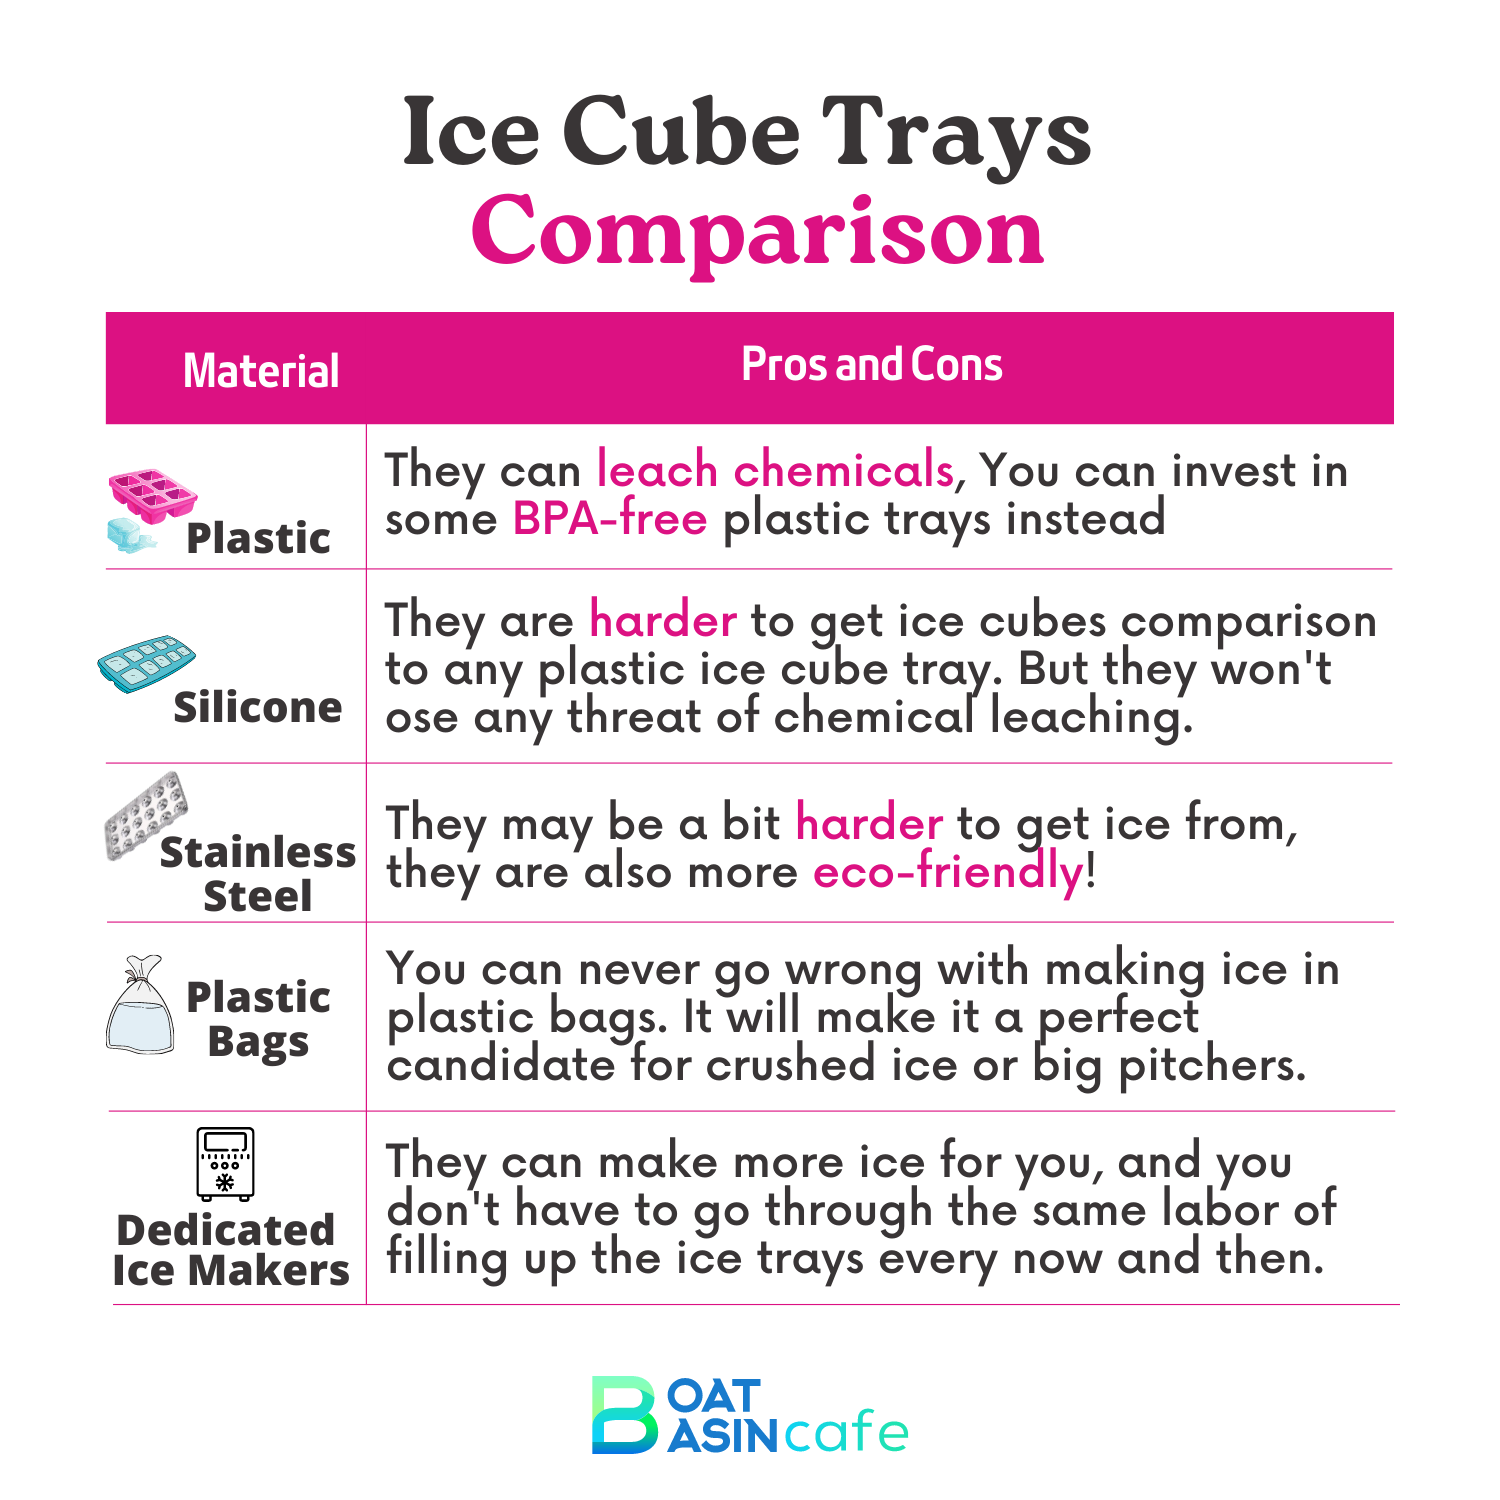 Ice Cube Trays 
Comparison